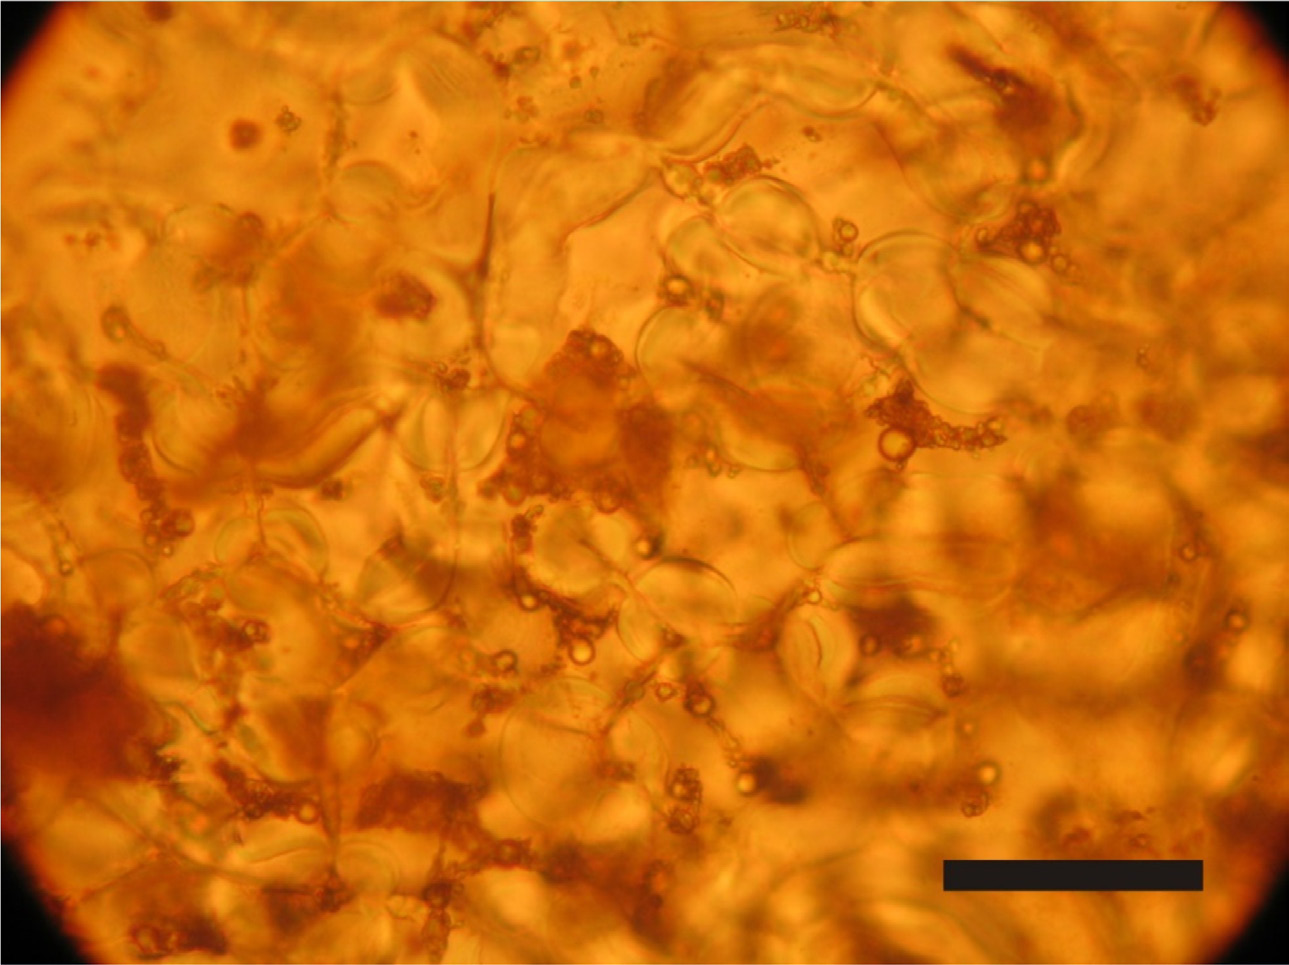 Figura 7: Corte histológico de cotilédone de H. courbaril evidenciando os compostos fenólicos presentes nas células (manchas escuras) através do teste de cloreto de ferro a 1%. Barra=200 µm.